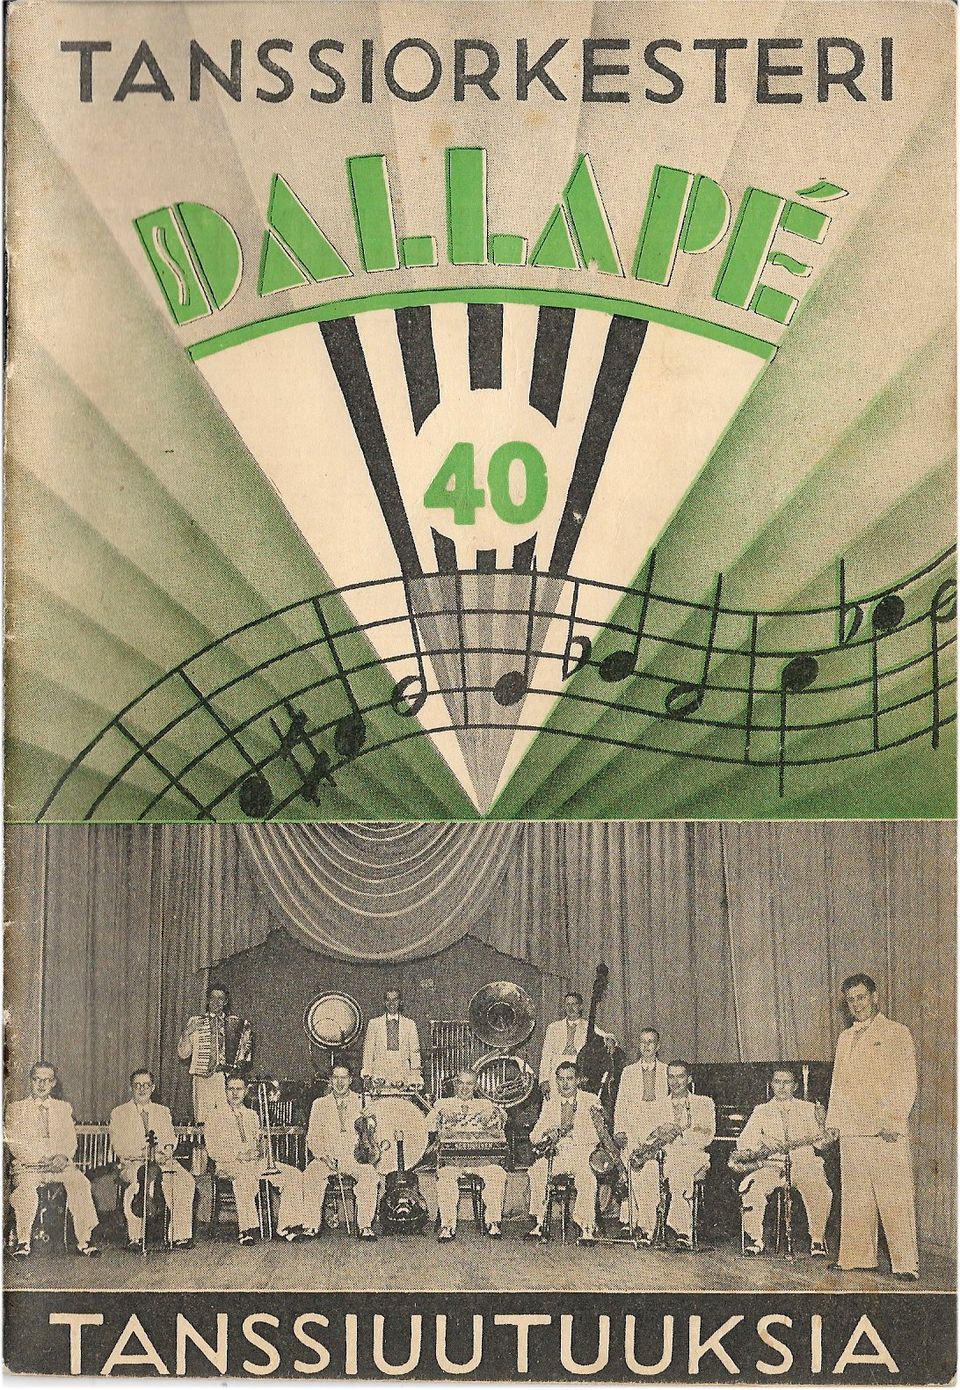 Tanssiorkesteri Dallapé Tanssiuutuuksia 40 v. 1938